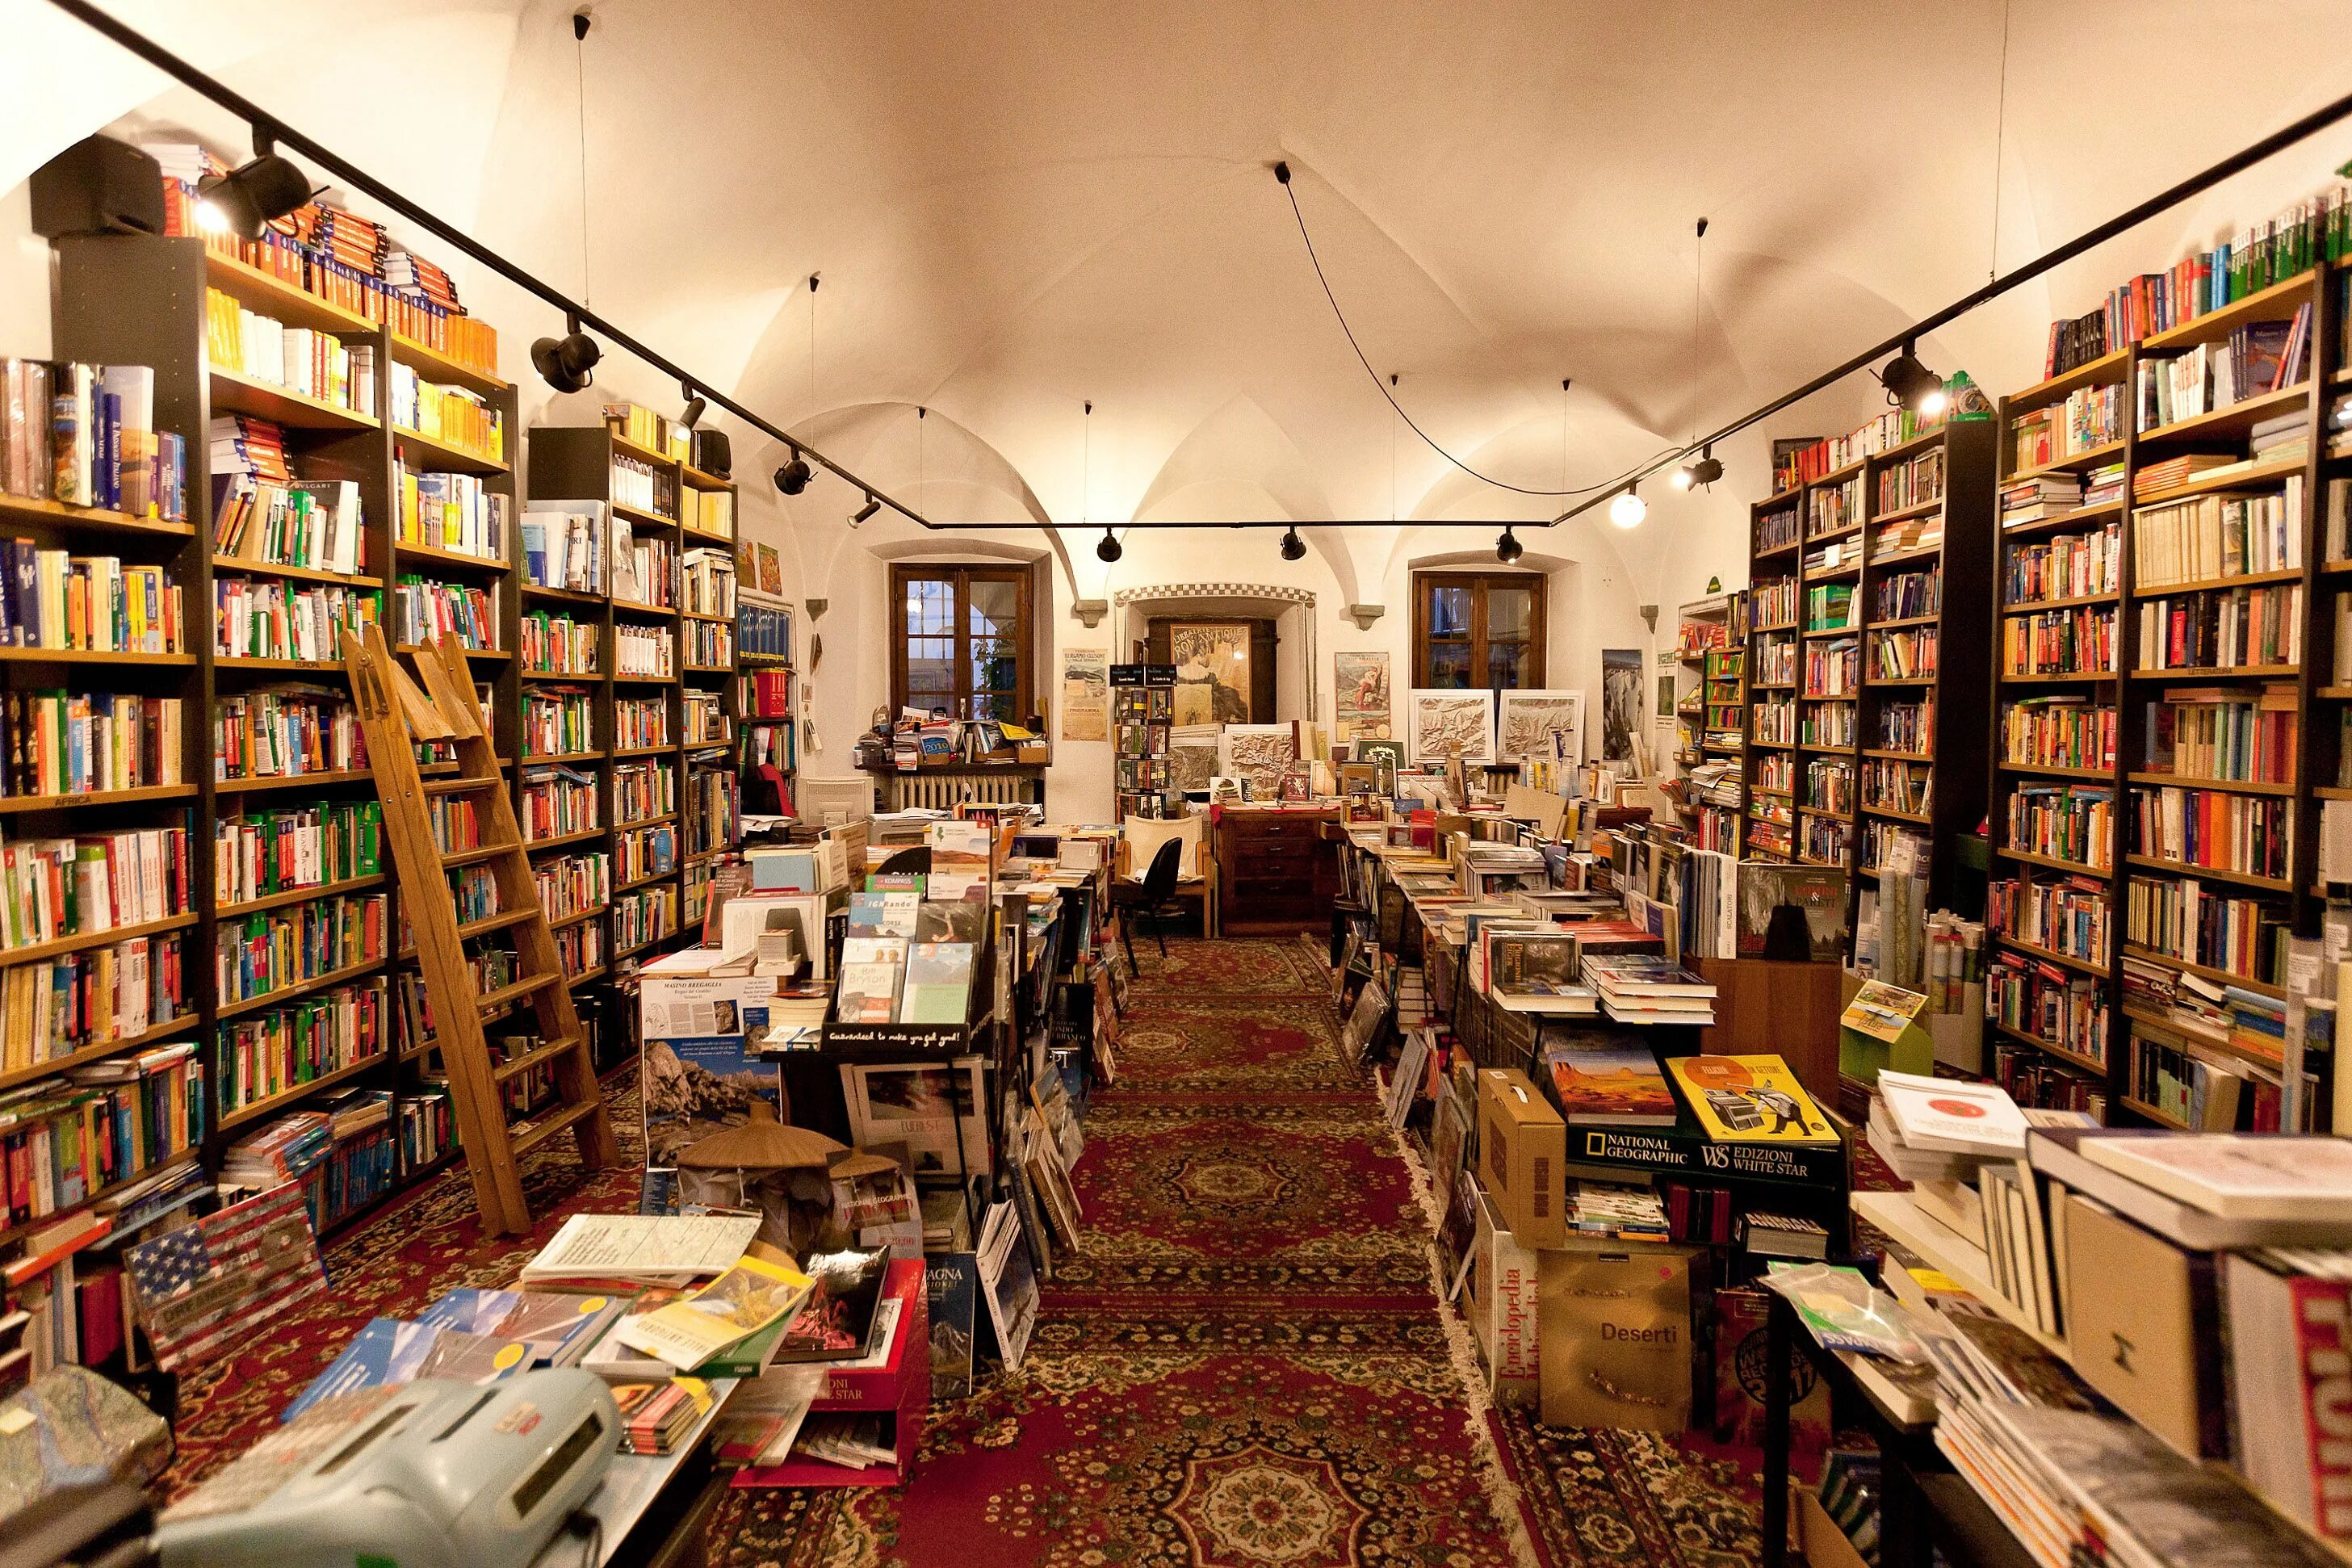 Libreria магазин. Италия книжный рынок. Bookshop (bookstore). Bookshop / bookstore - book. More books shop